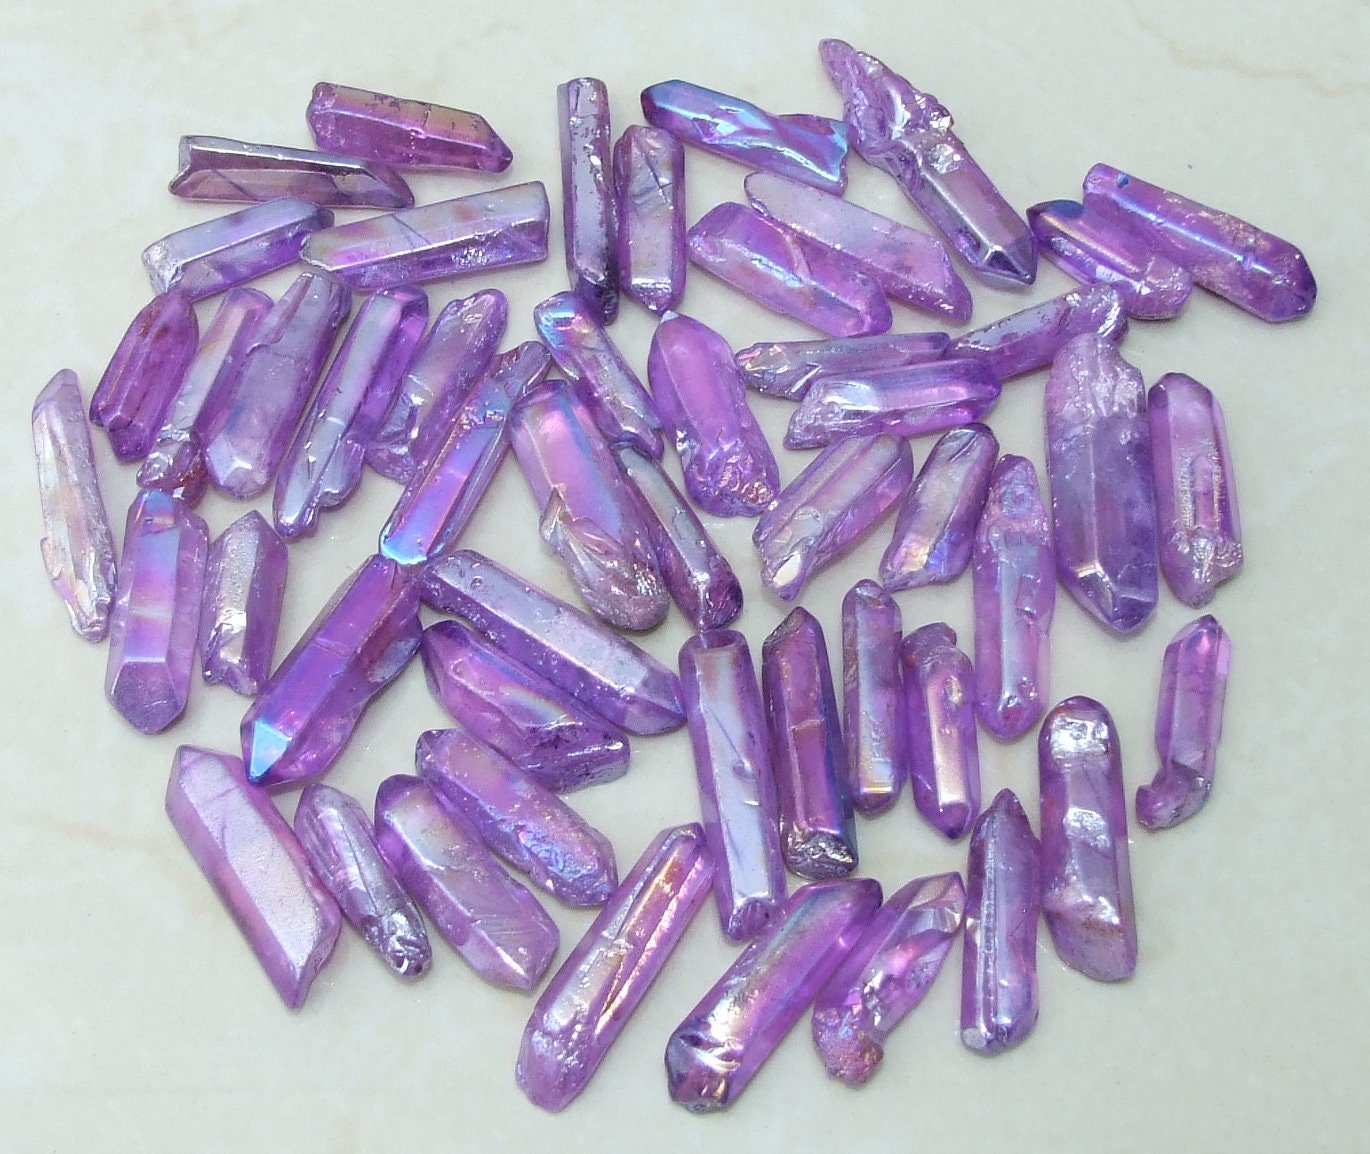 10 Lightly Polished Undrilled Bulk Aura Quartz Crystals Points, Titanium Quartz, Gemstone Beads, Pendant, Wand, Healing Quartz, 30-45+mm